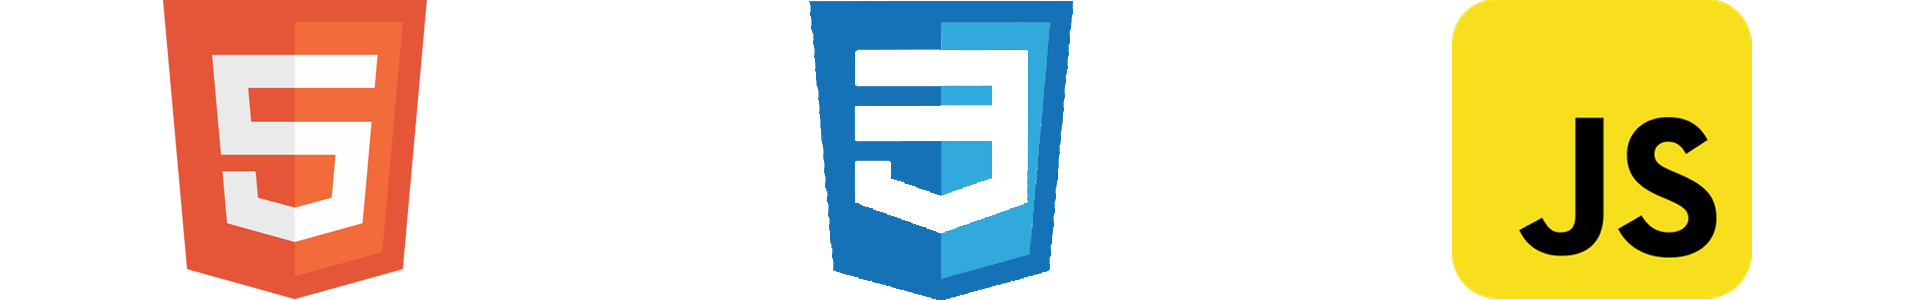 HTML, CSS, JavaScript logos